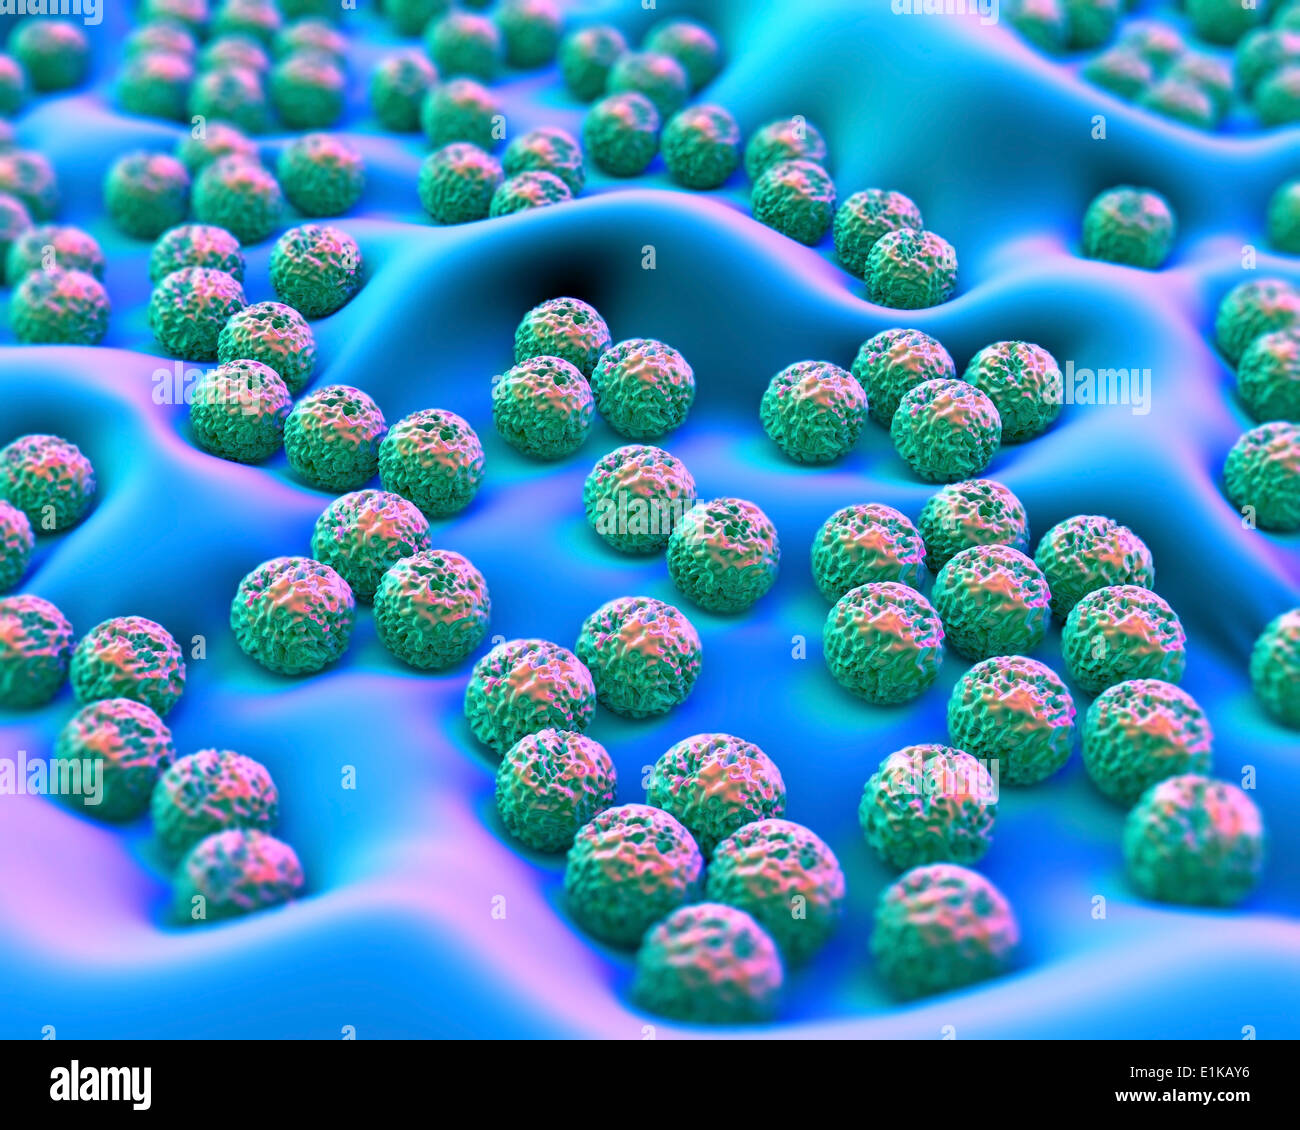 Superbug bacteria computer artwork. Stock Photo